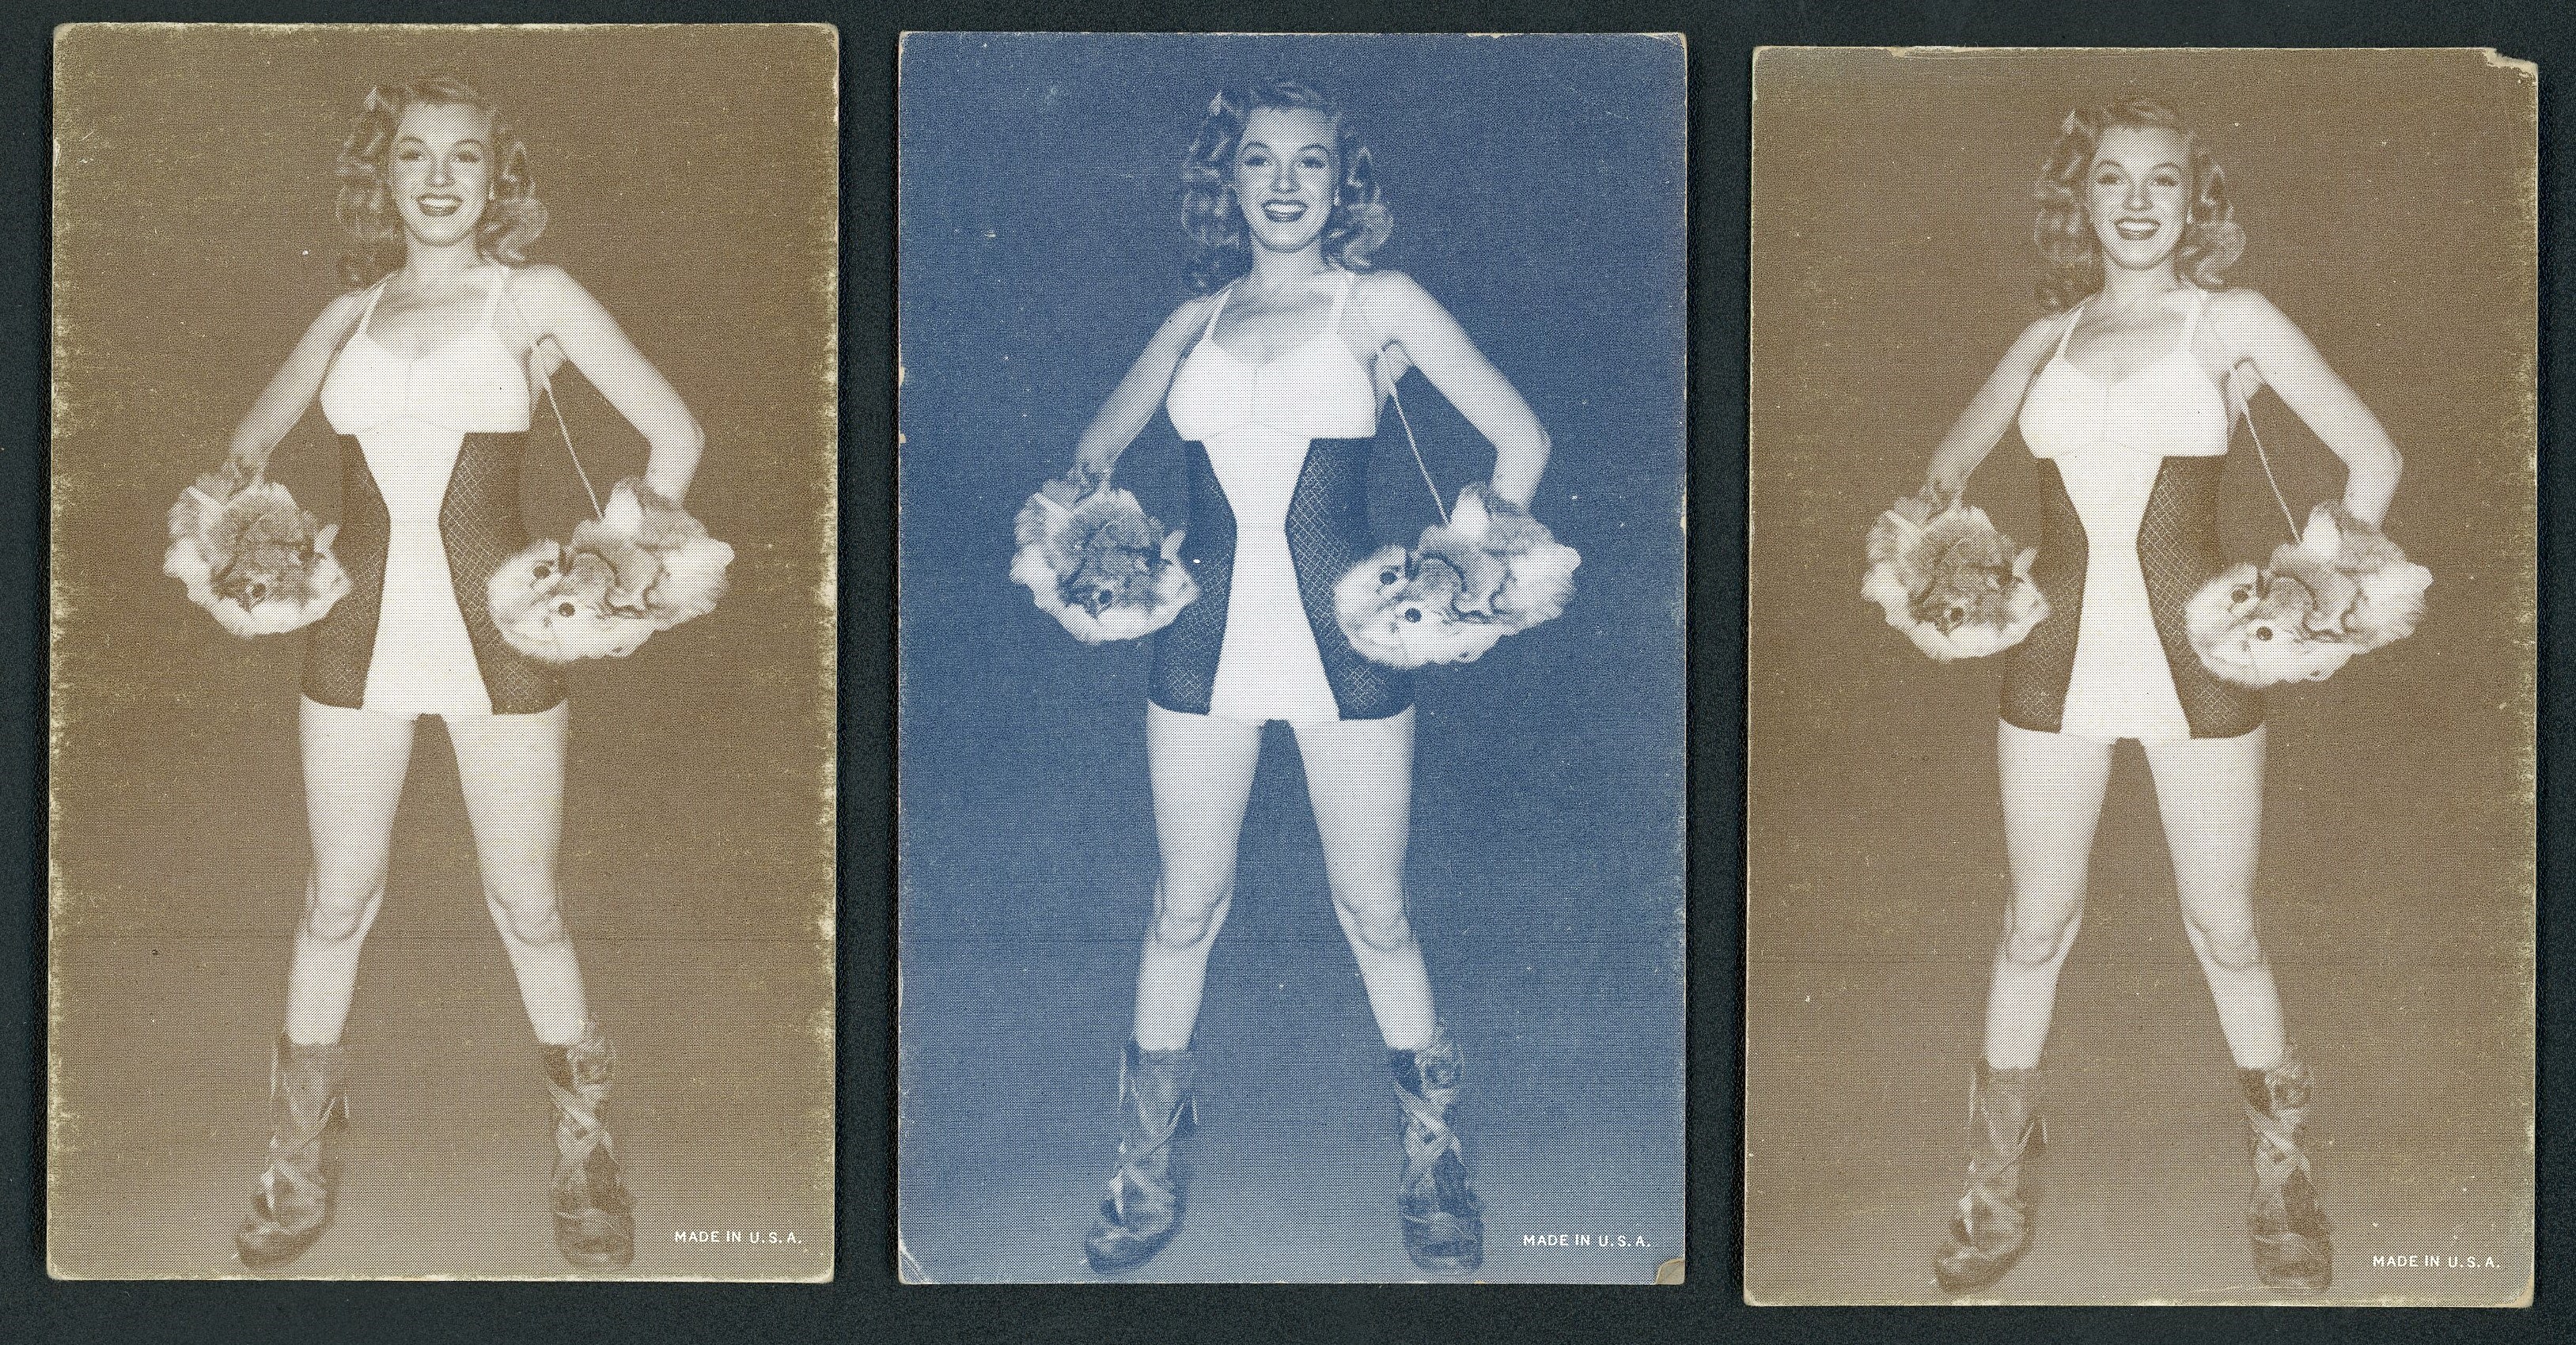 - 1950s Marilyn Monroe Exhibit Card Collection of 6 - Rare!